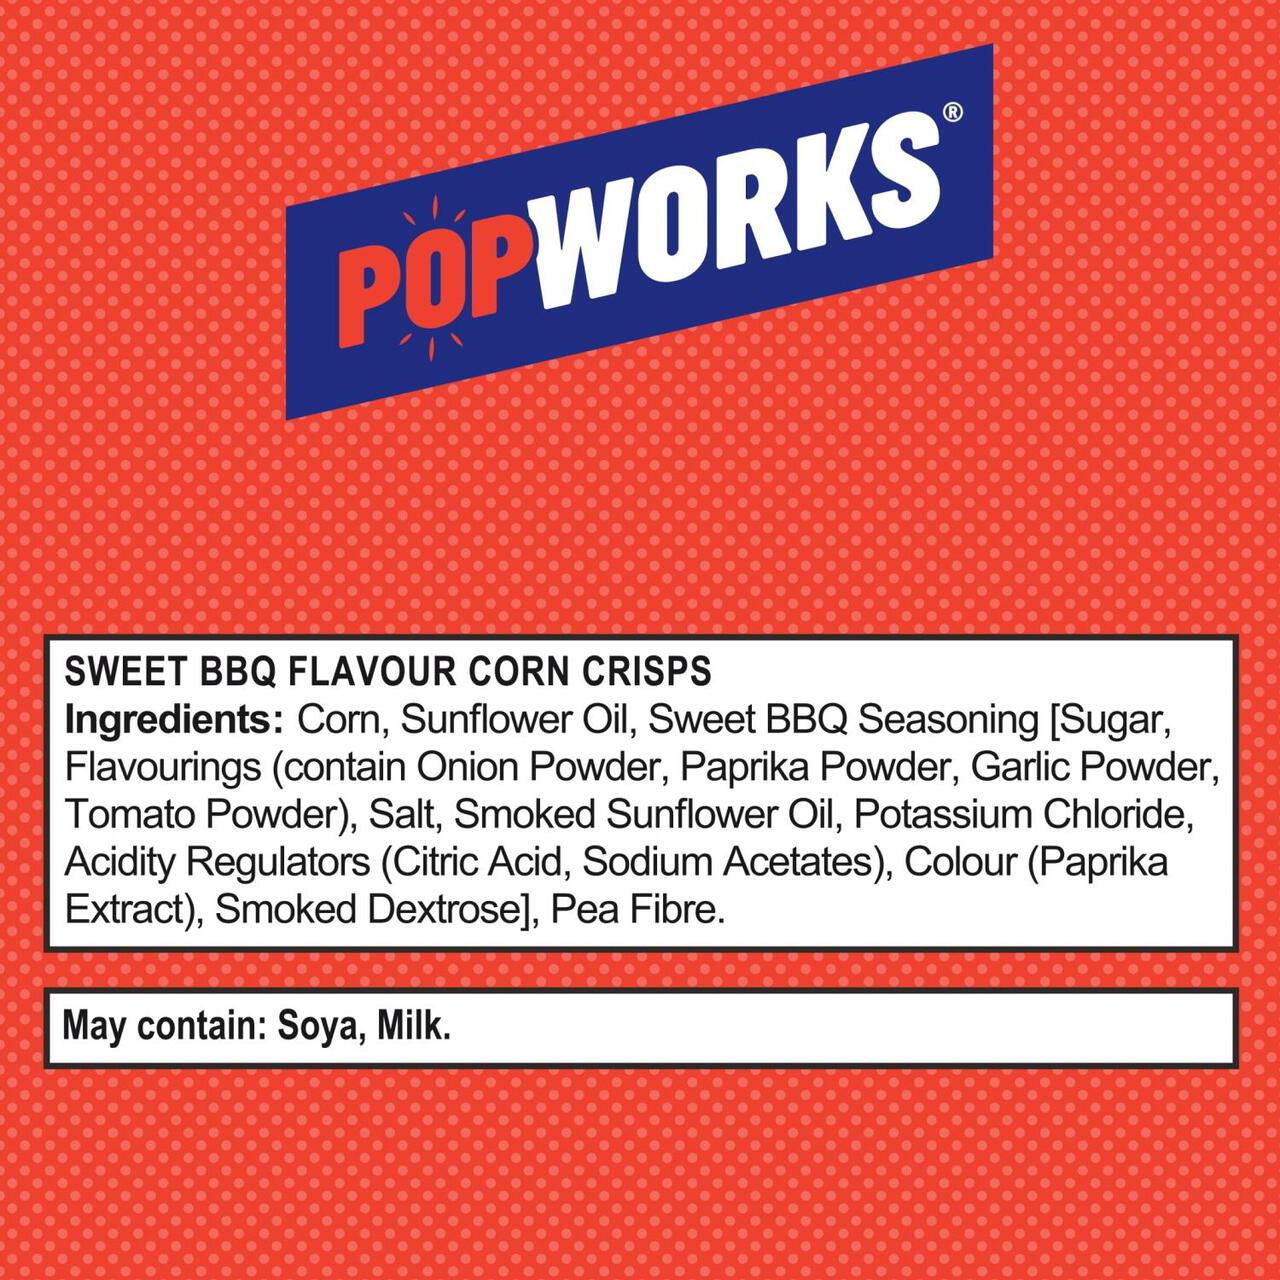 Popworks Sweet BBQ Popped Crisps Sharing Bag 85g